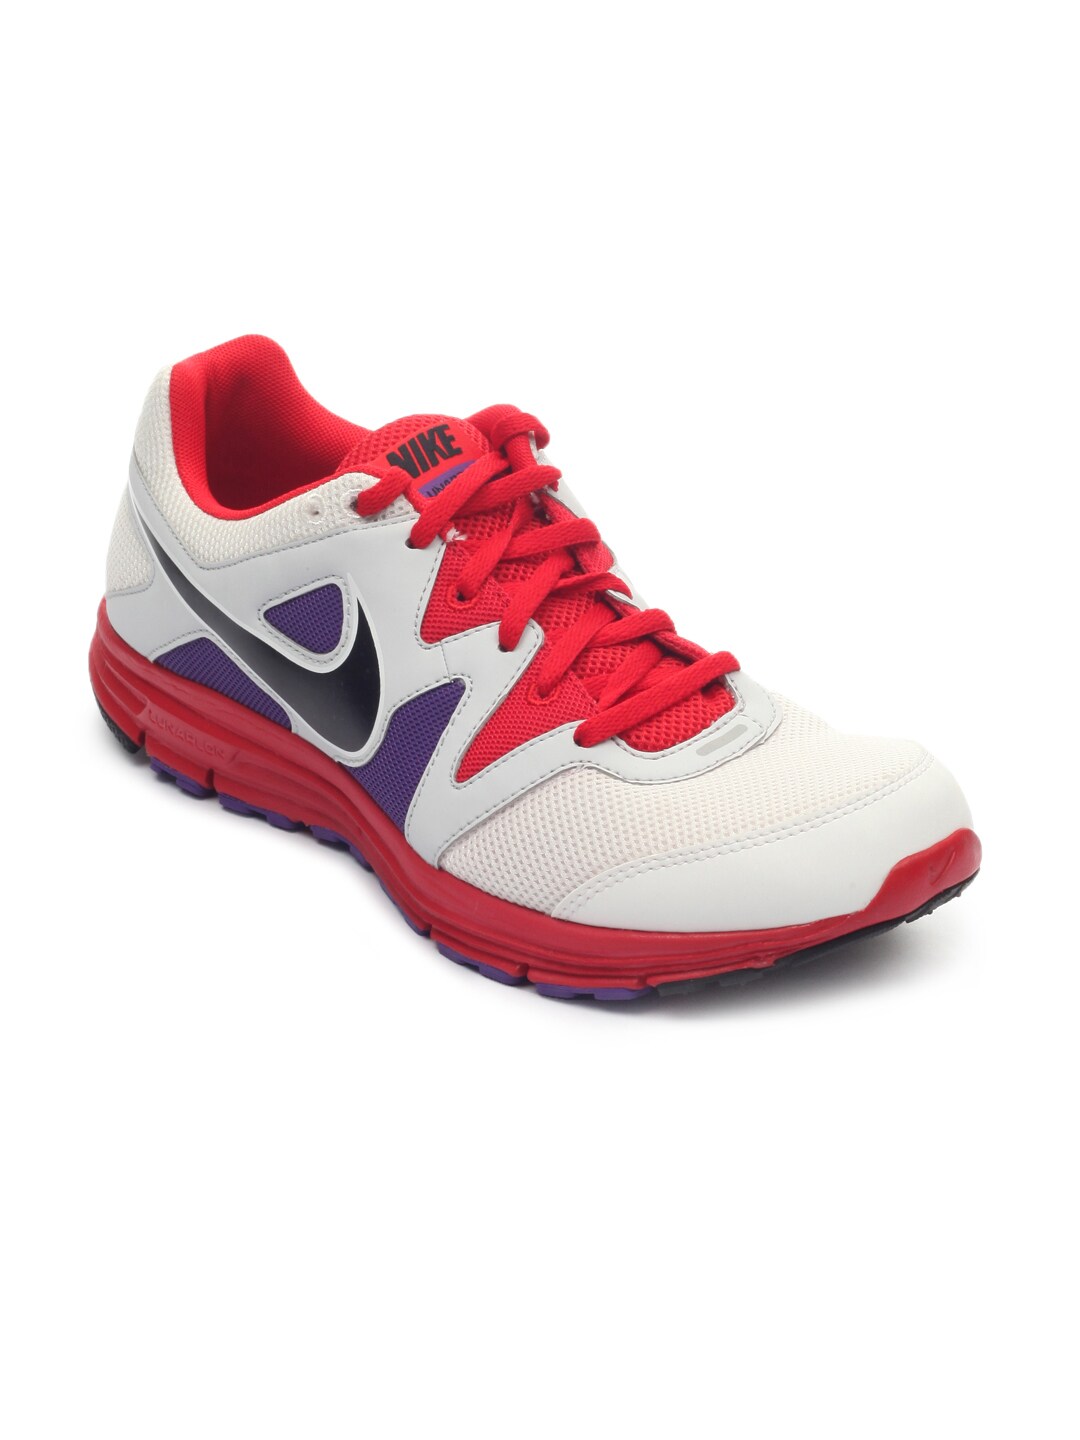 Nike Men Lunarfly White Sports Shoes